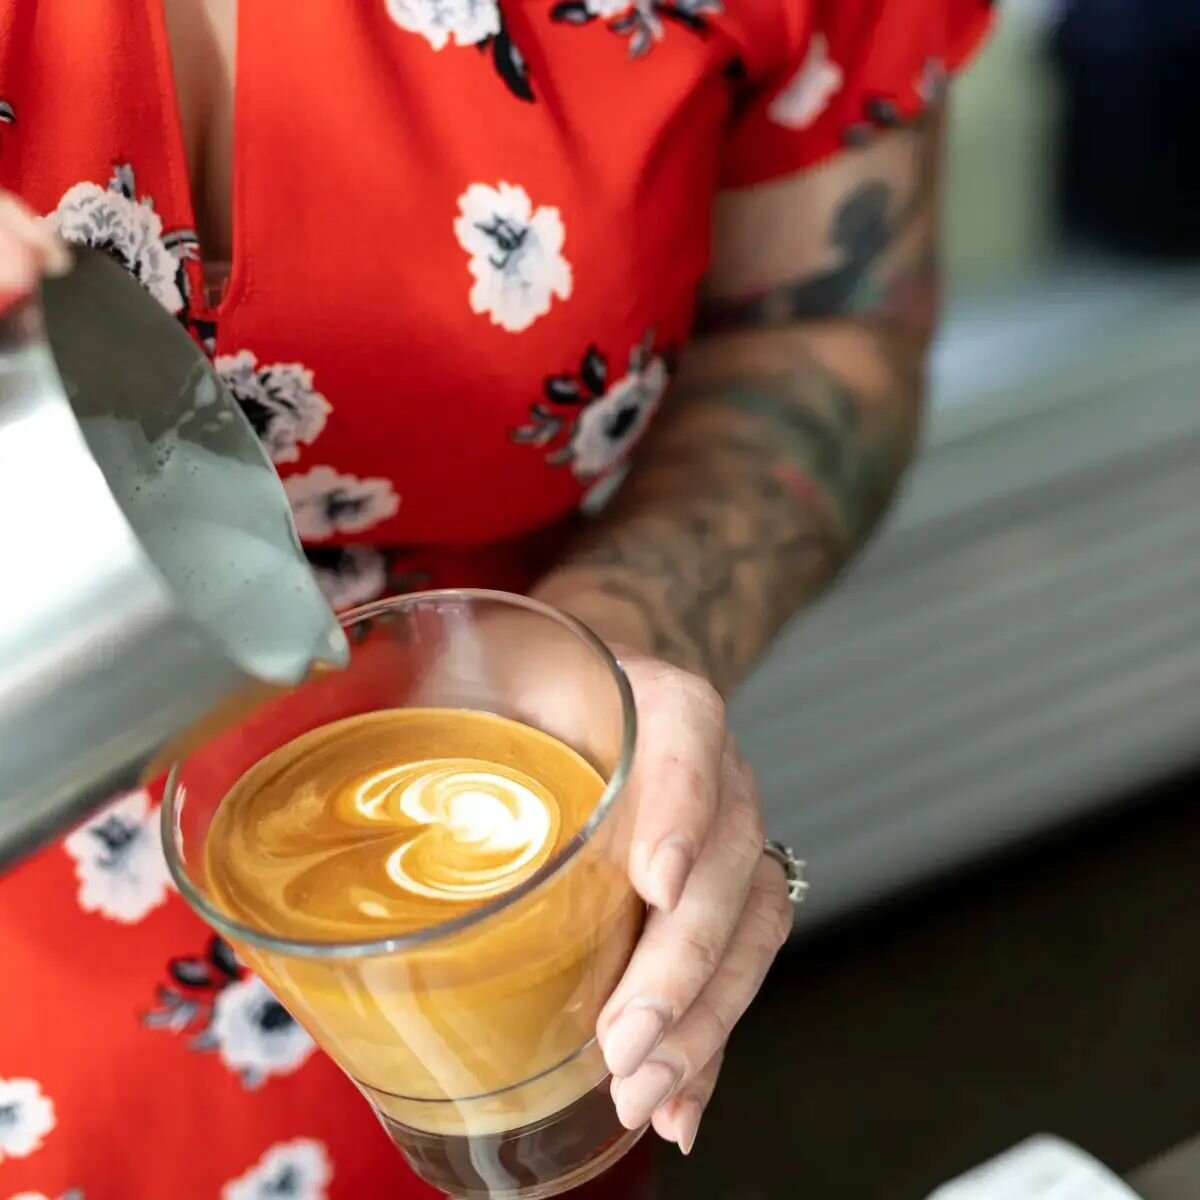 Coffee is a big deal...are you a connoisseur? How do you like yours? 
.
.
.
.
#launceston #launcestoncafescene #launcestondining #tasmania #discovertasmania #eatmylocal #food #coffee #coffeeislife #coffeeart #coffeetime #coffeeshop #coffeeshopvibes #